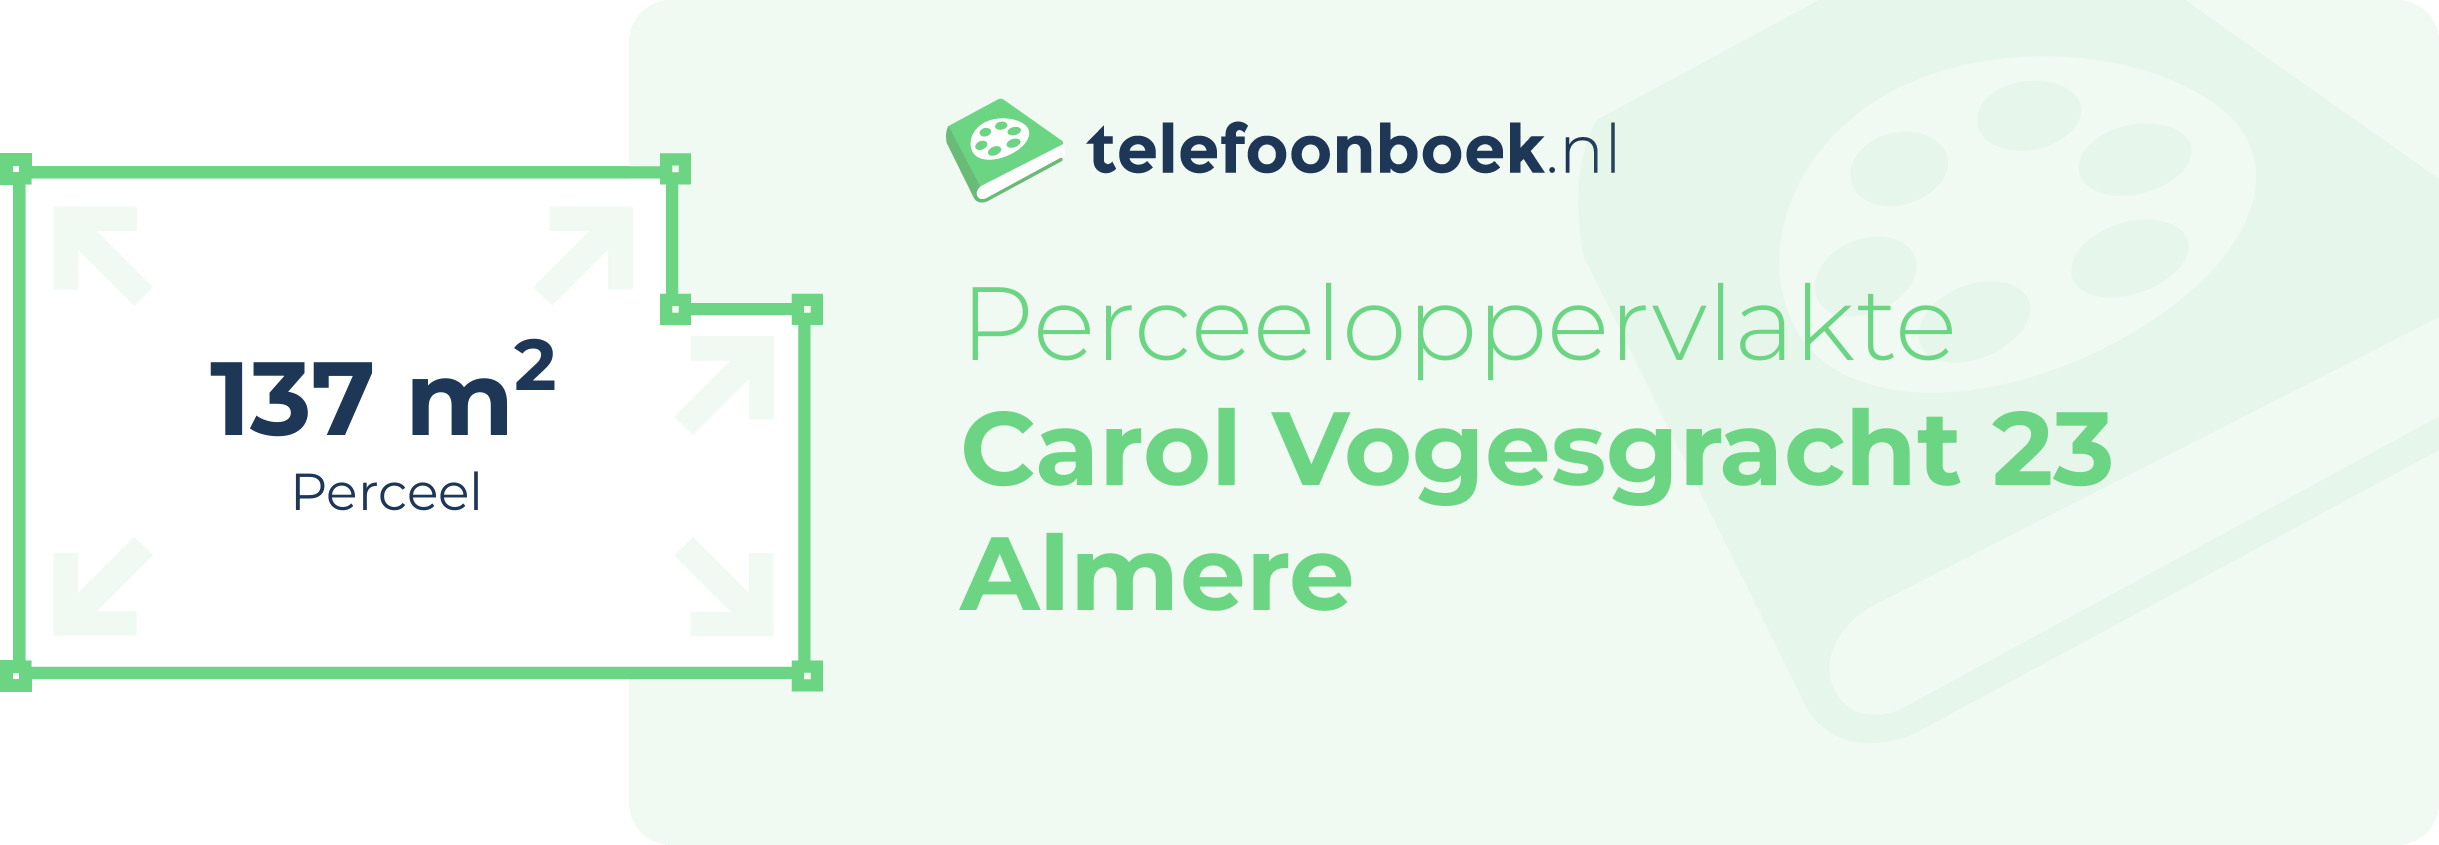 Perceeloppervlakte Carol Vogesgracht 23 Almere